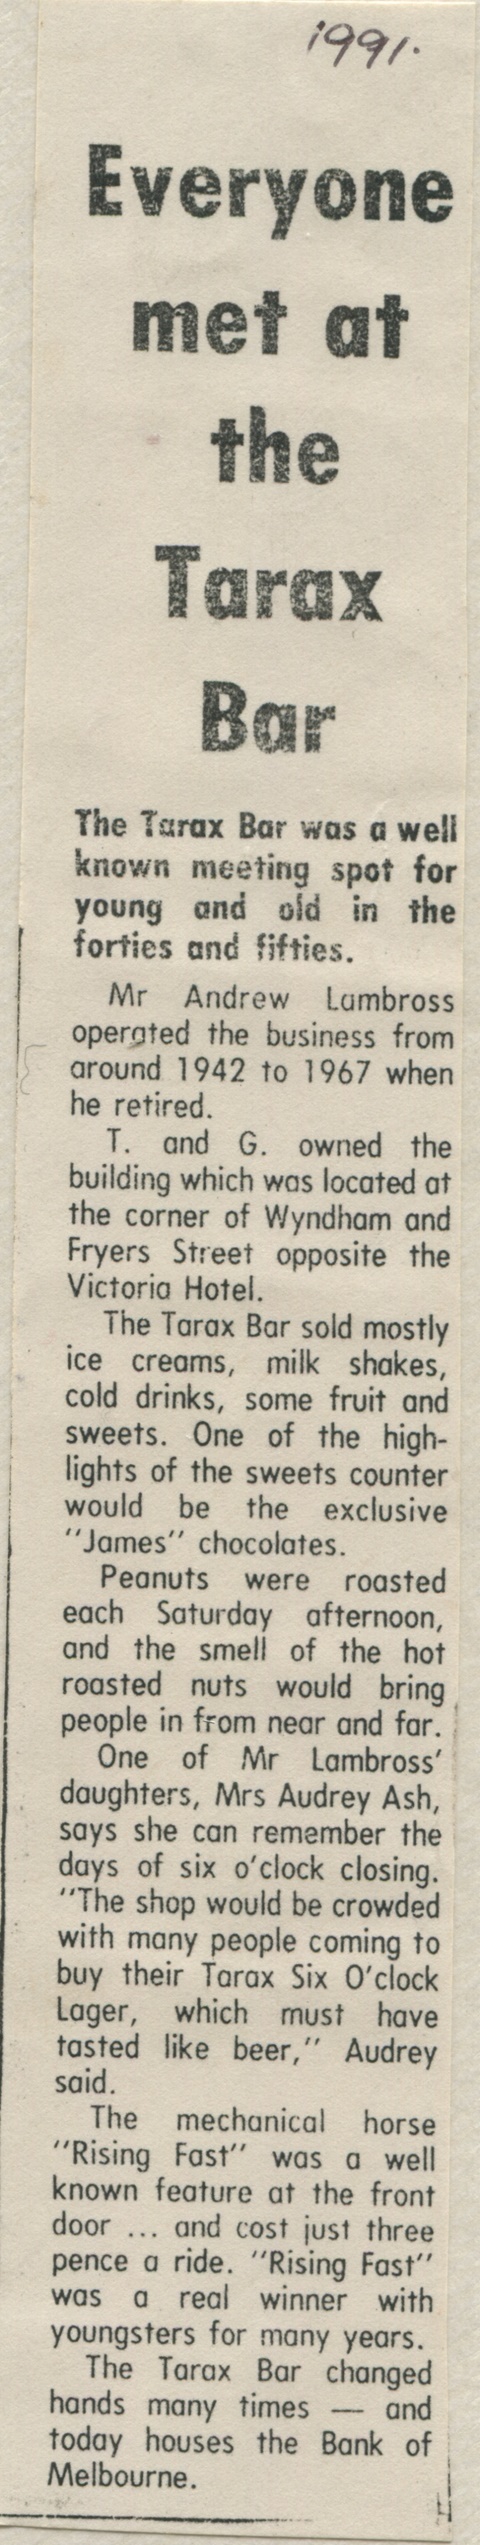 Everyone met at the Tarax Bar article, 1991